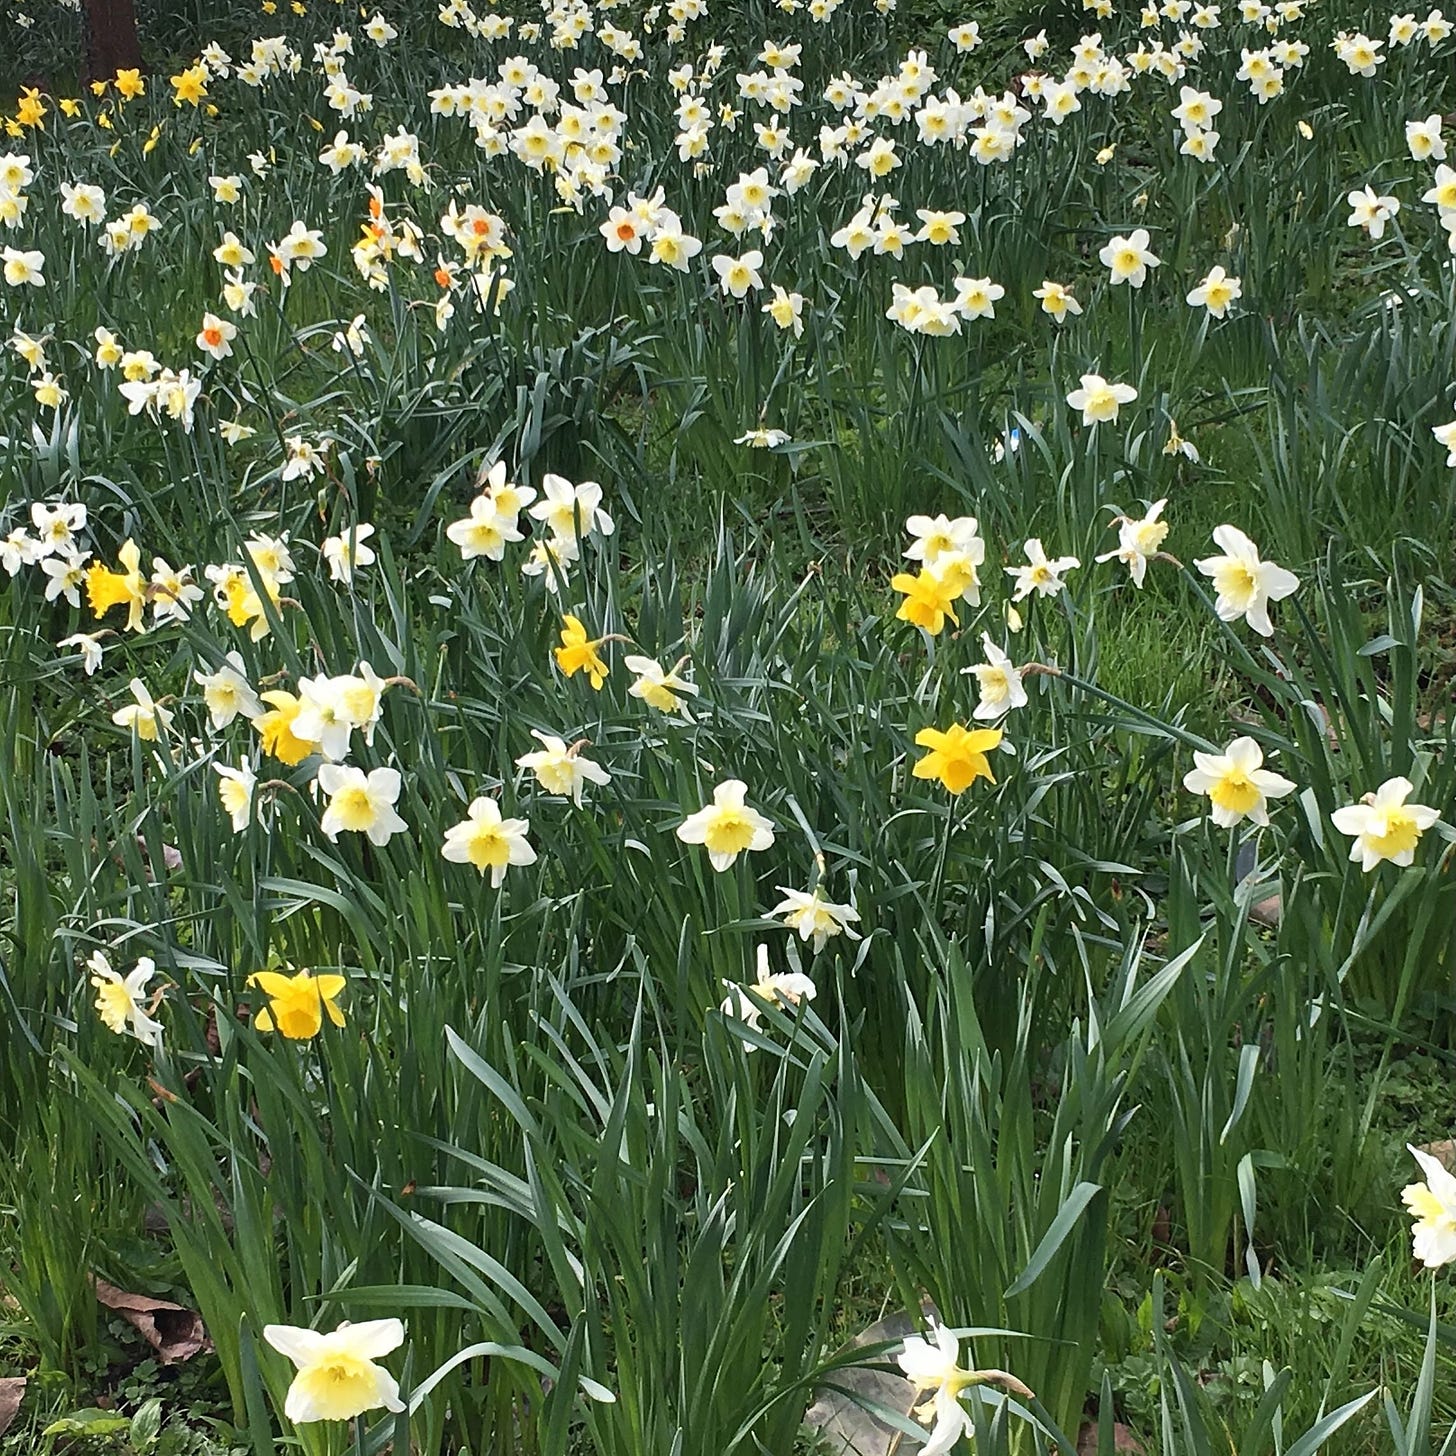 photo of daffodils by Sabrina SImpson